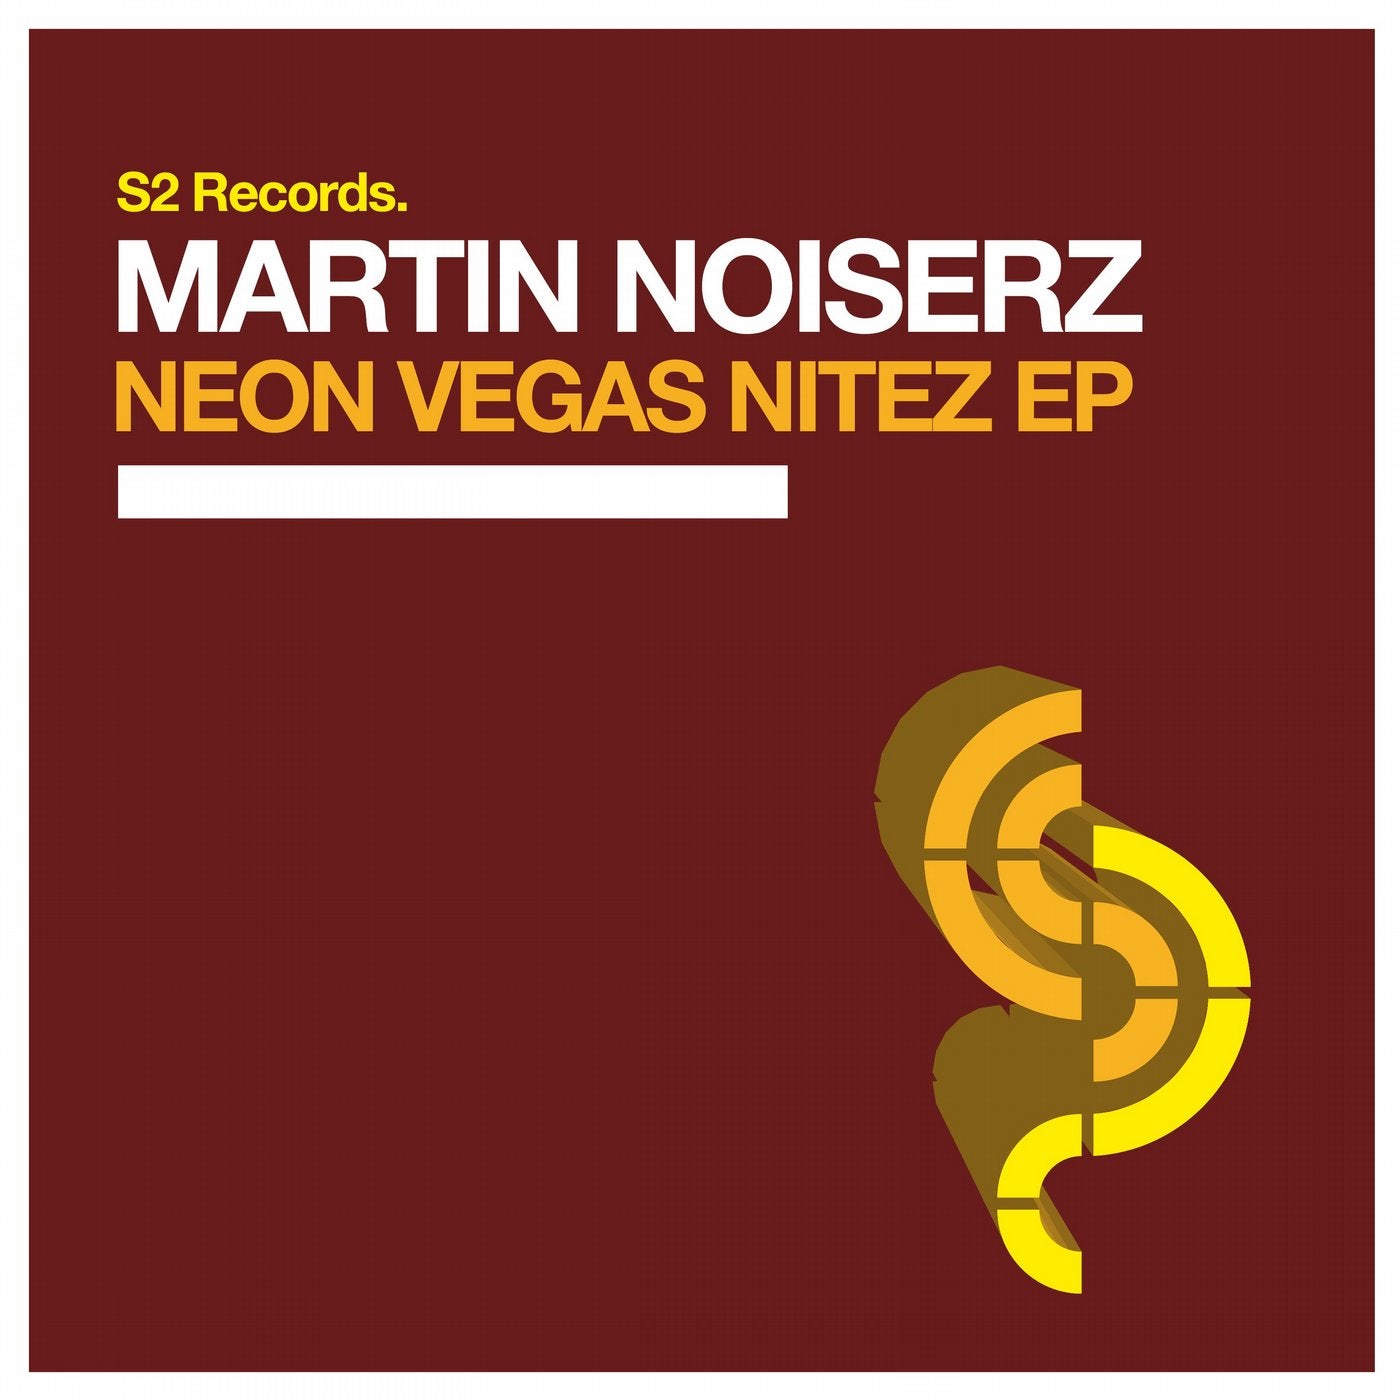 Neon Vegas Nitez EP